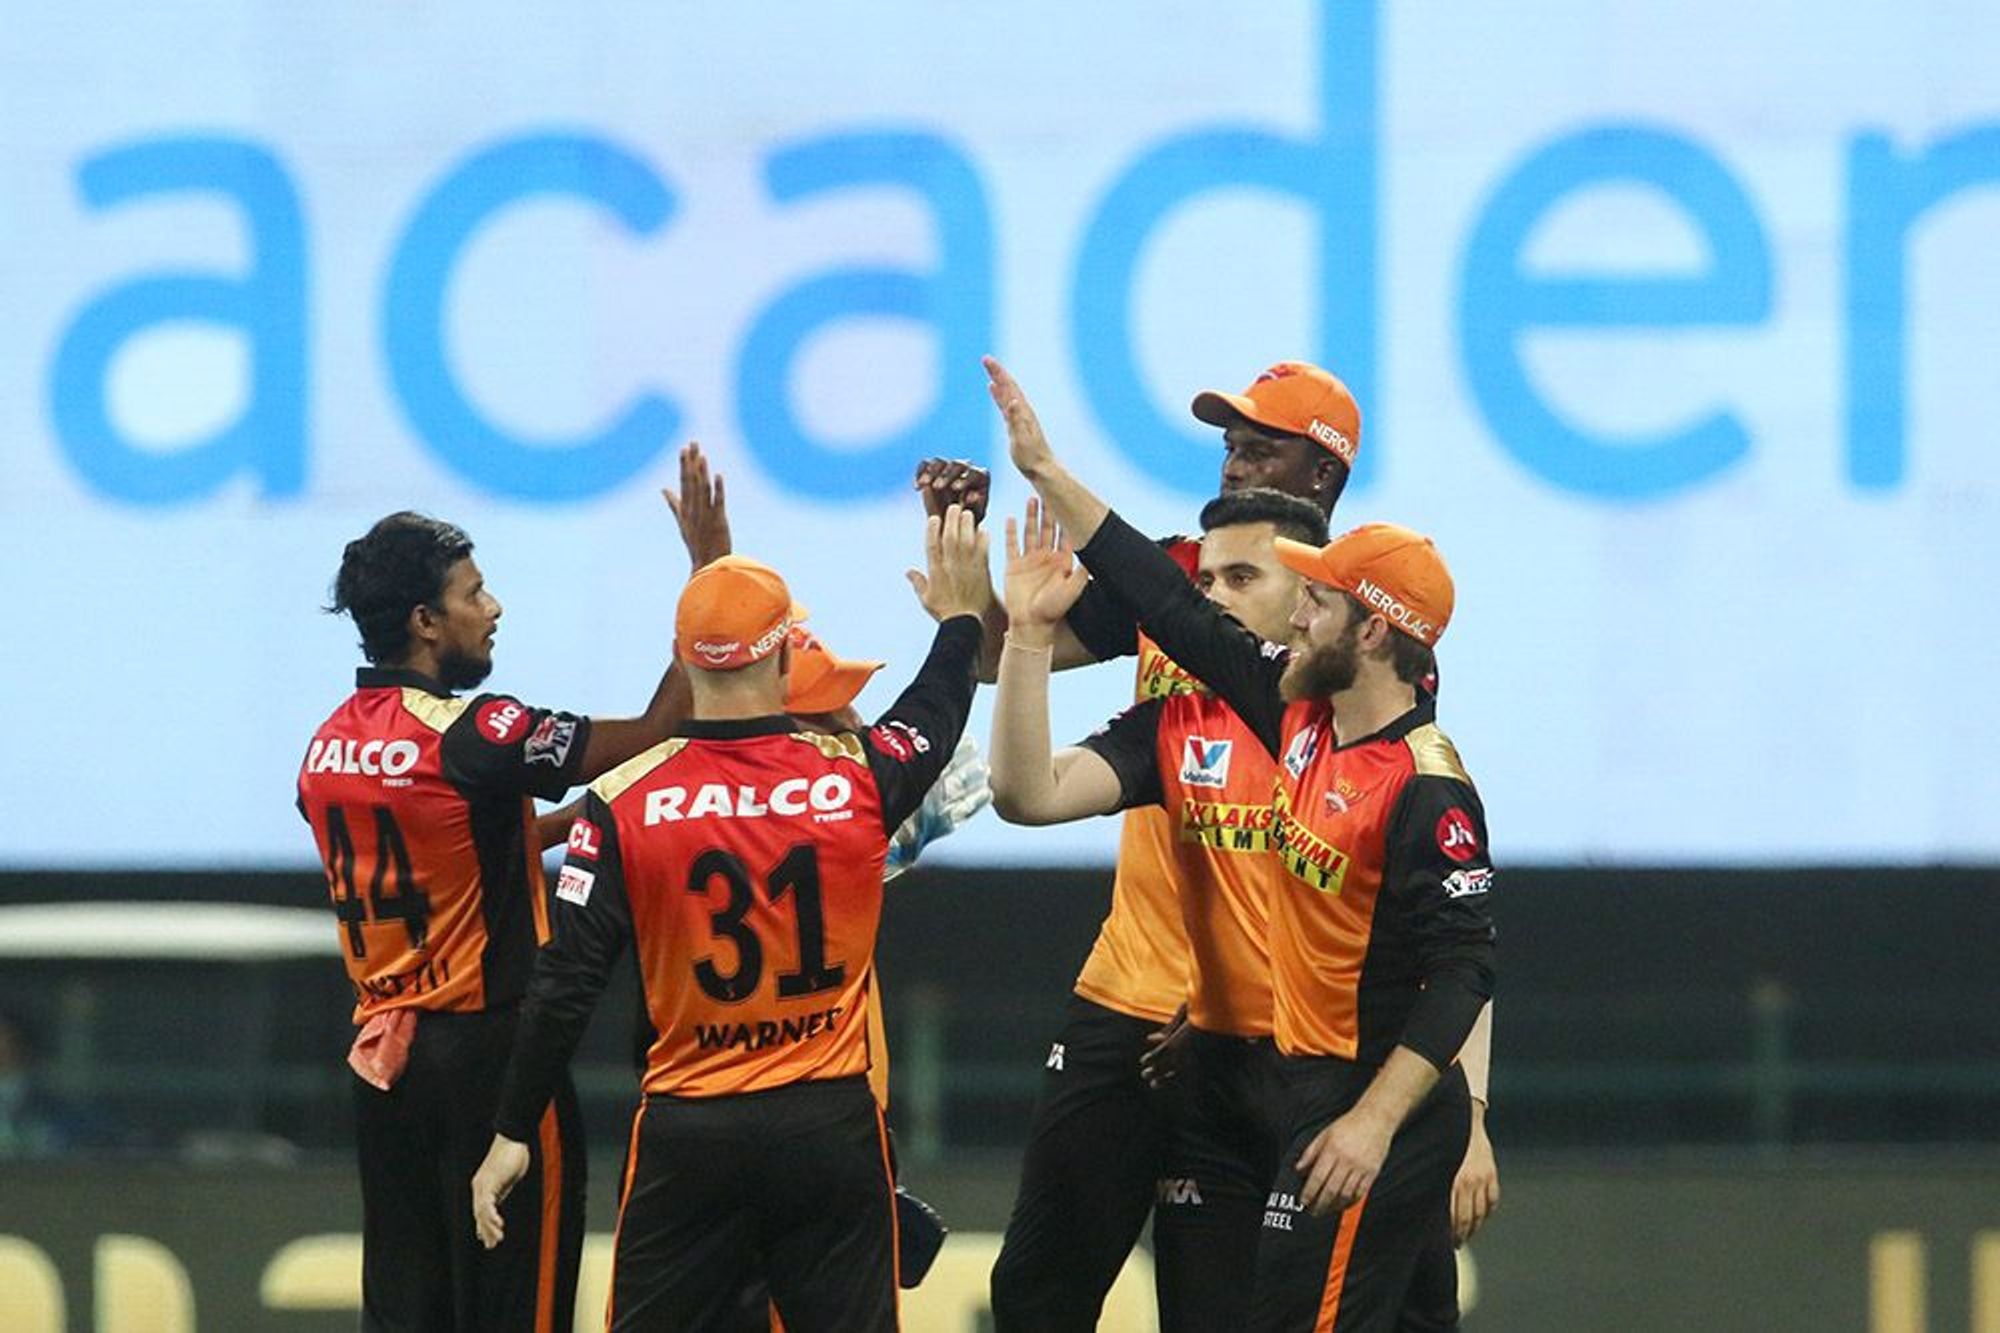 Sunrisers Hyderabad won by 6 wickets